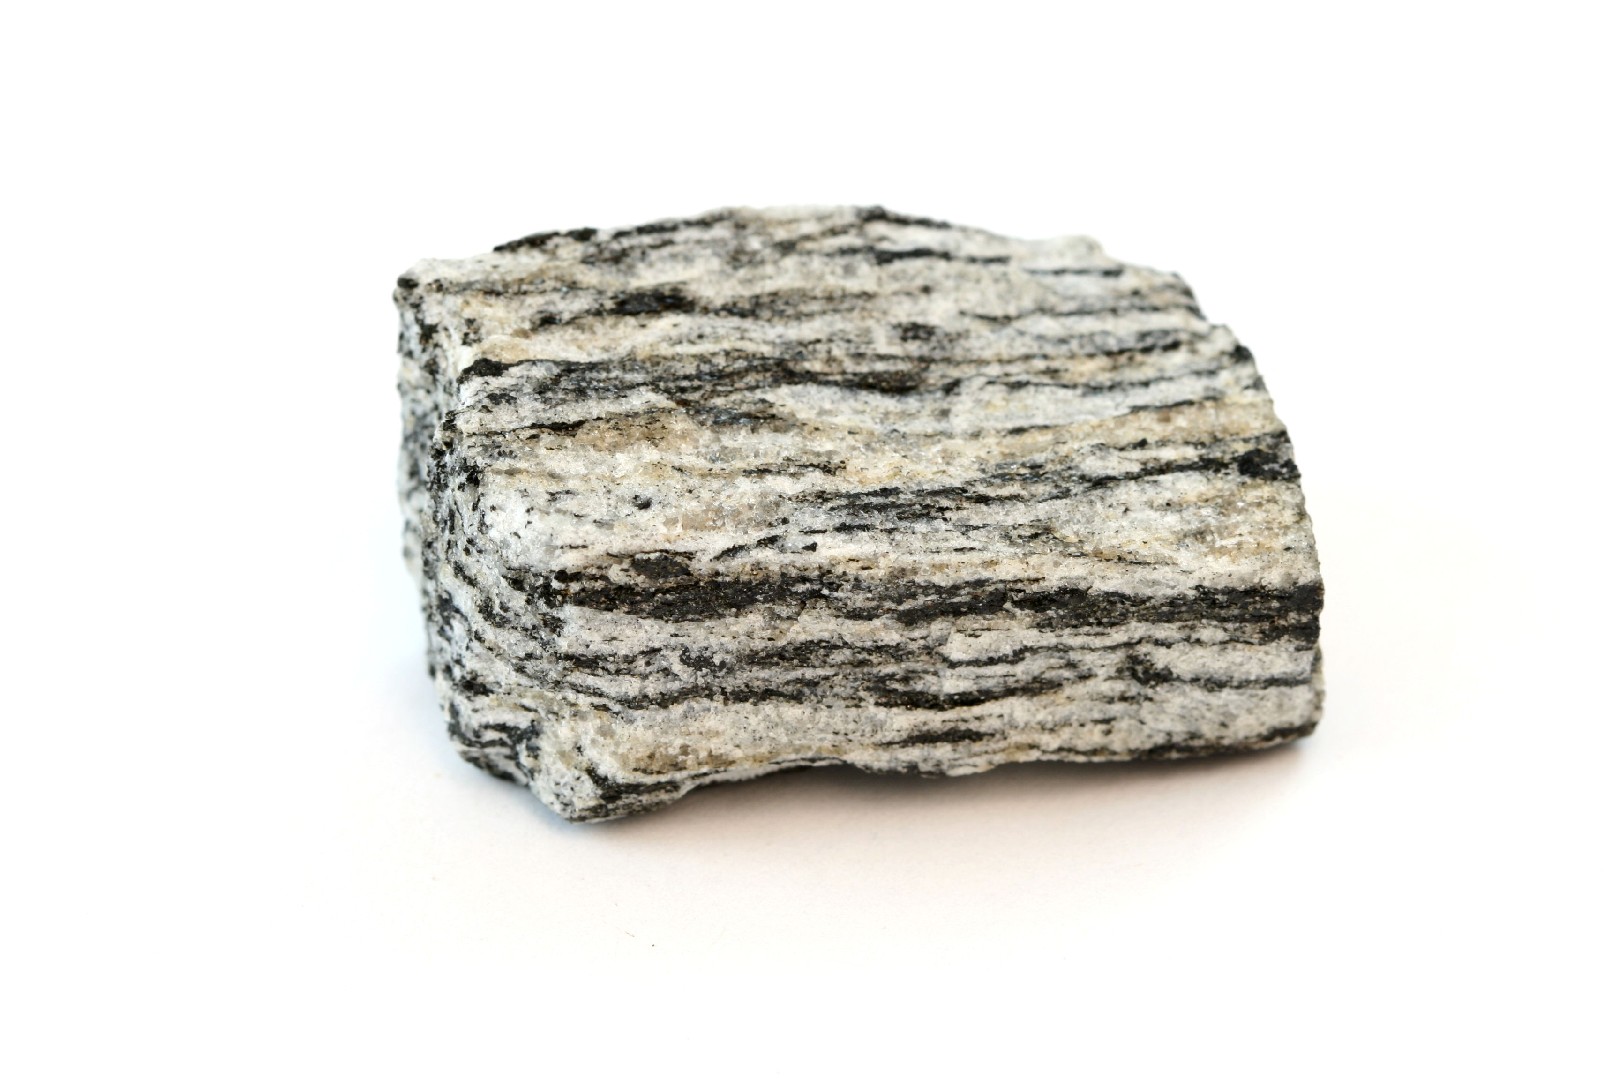 片麻岩 (Gneiss)